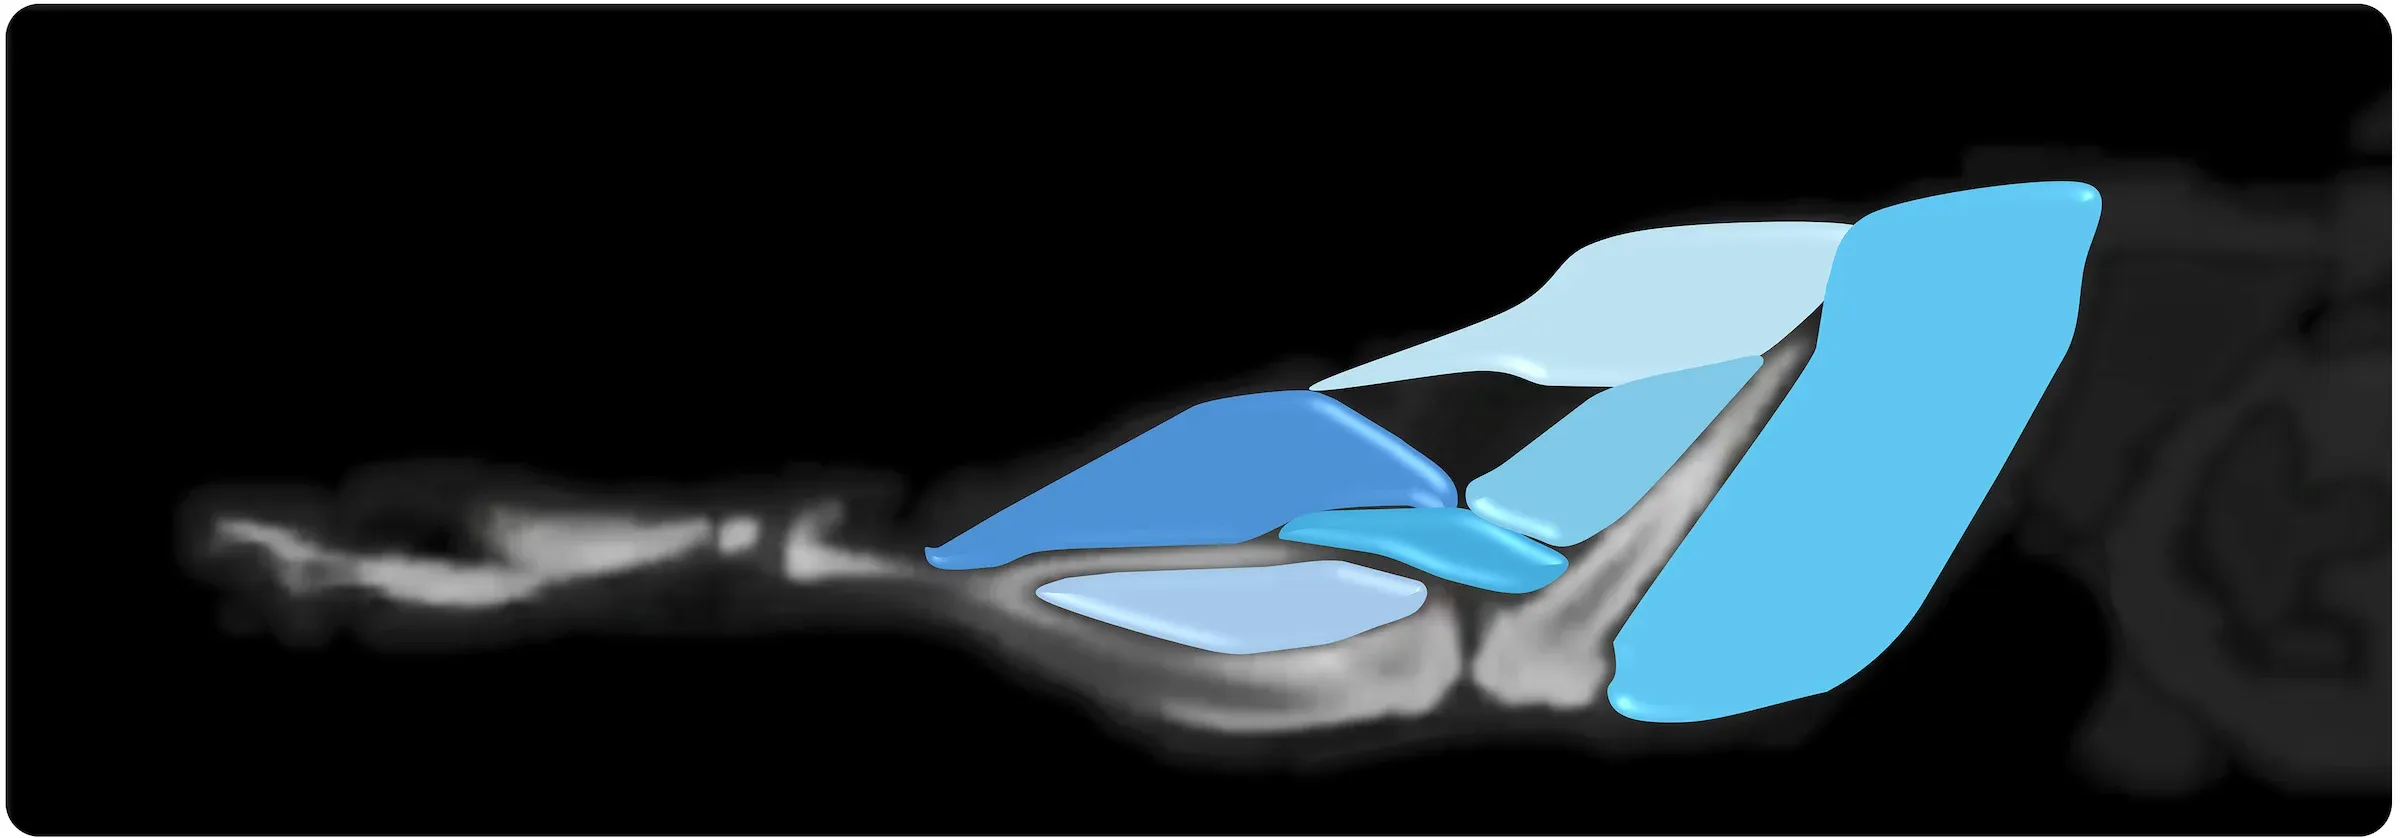 CT - Mouse leg muscles Segmentation Scan